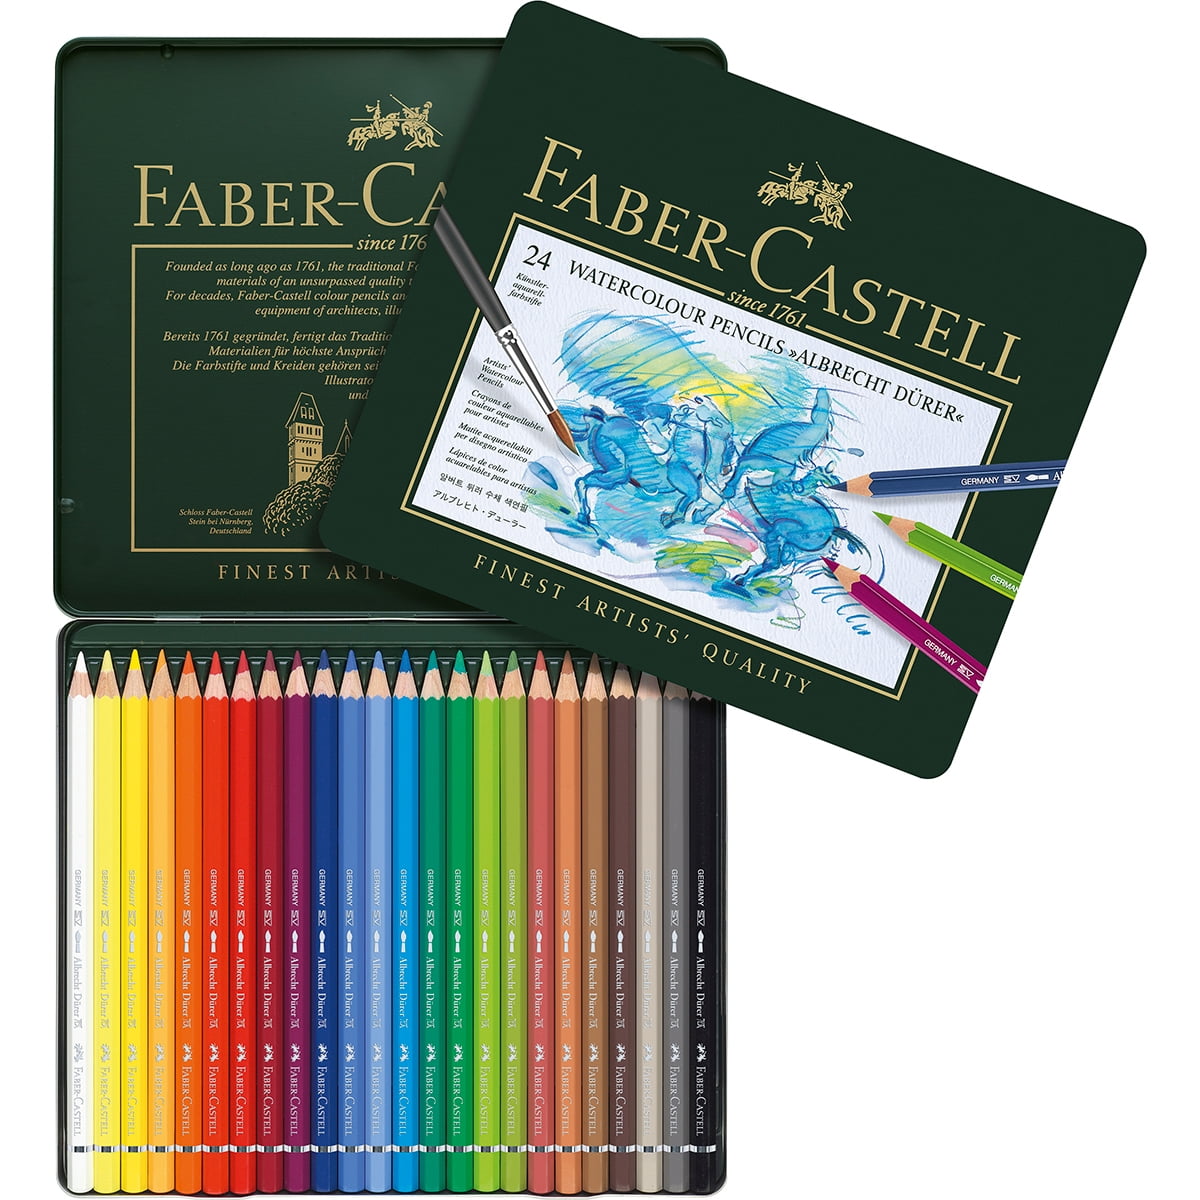 Faber-Castell Do Art: Watercolor Pencil Kit - Sam Flax Atlanta